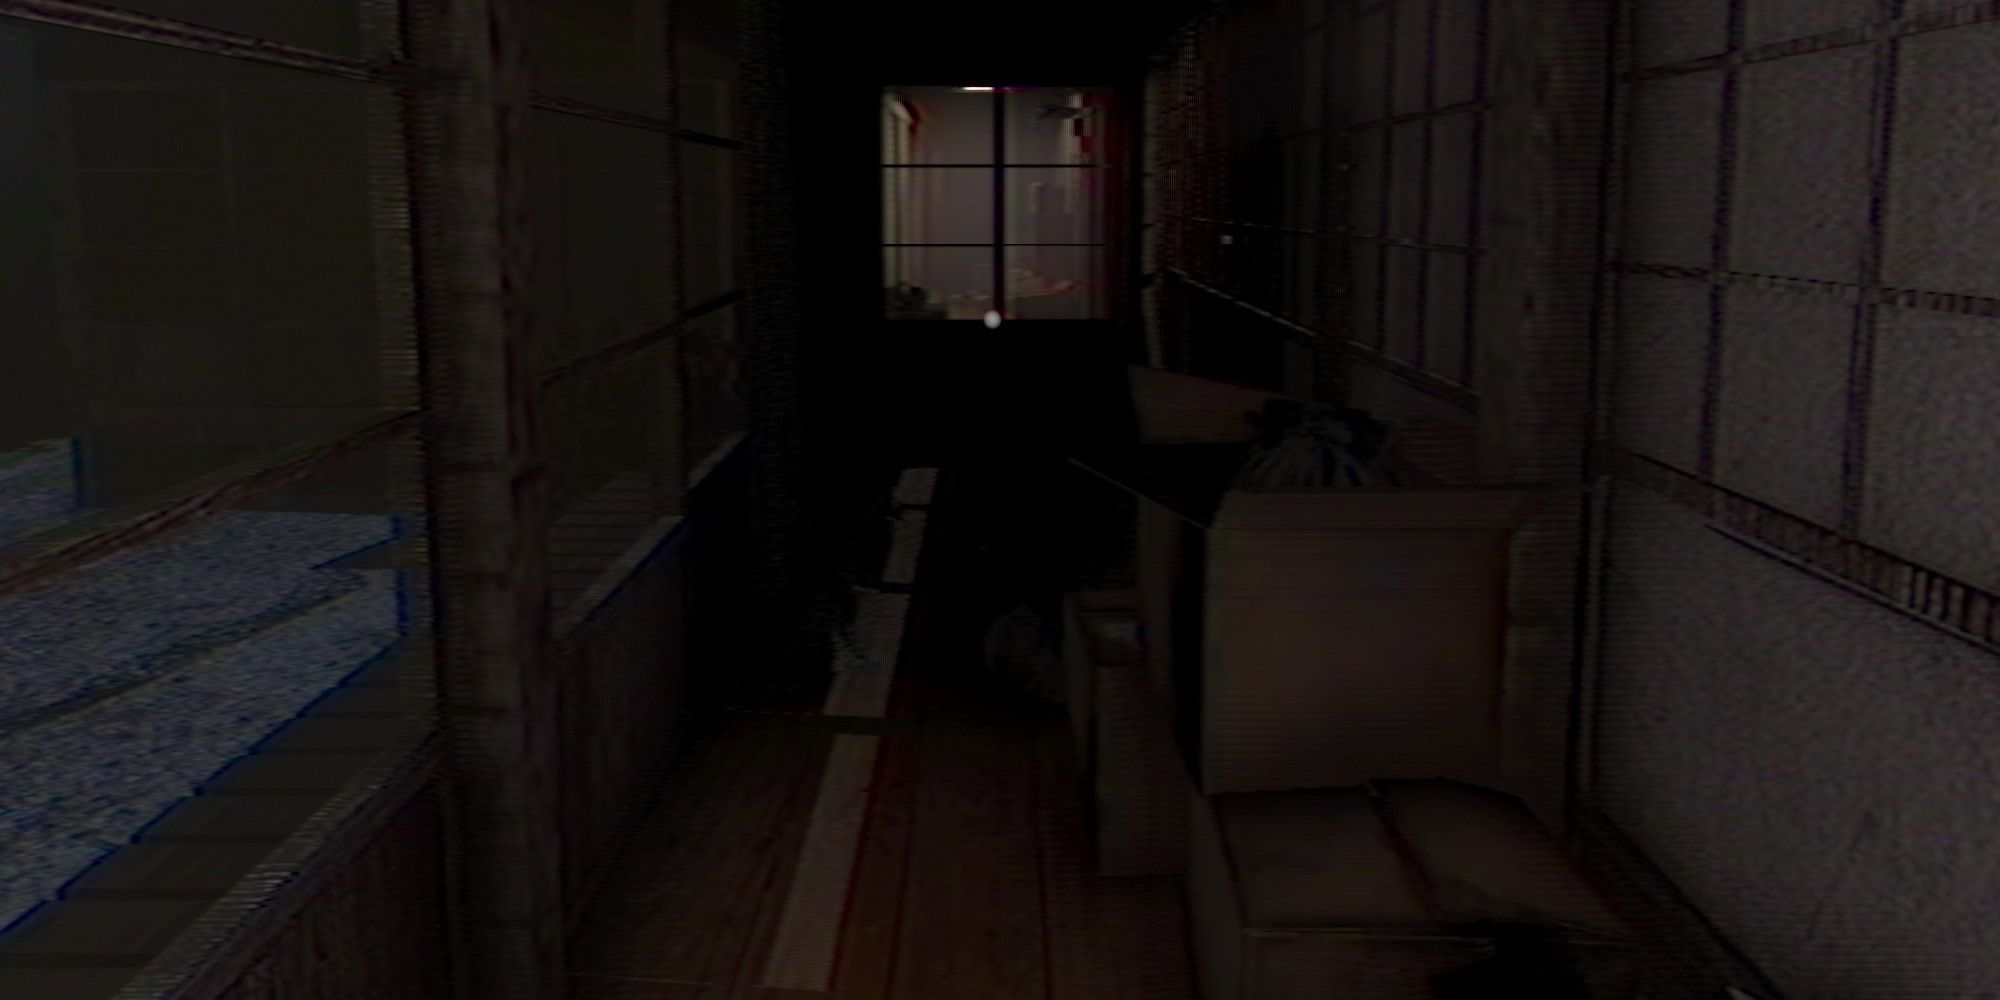 the caregiver, VHS filter, dark Japanese hallway